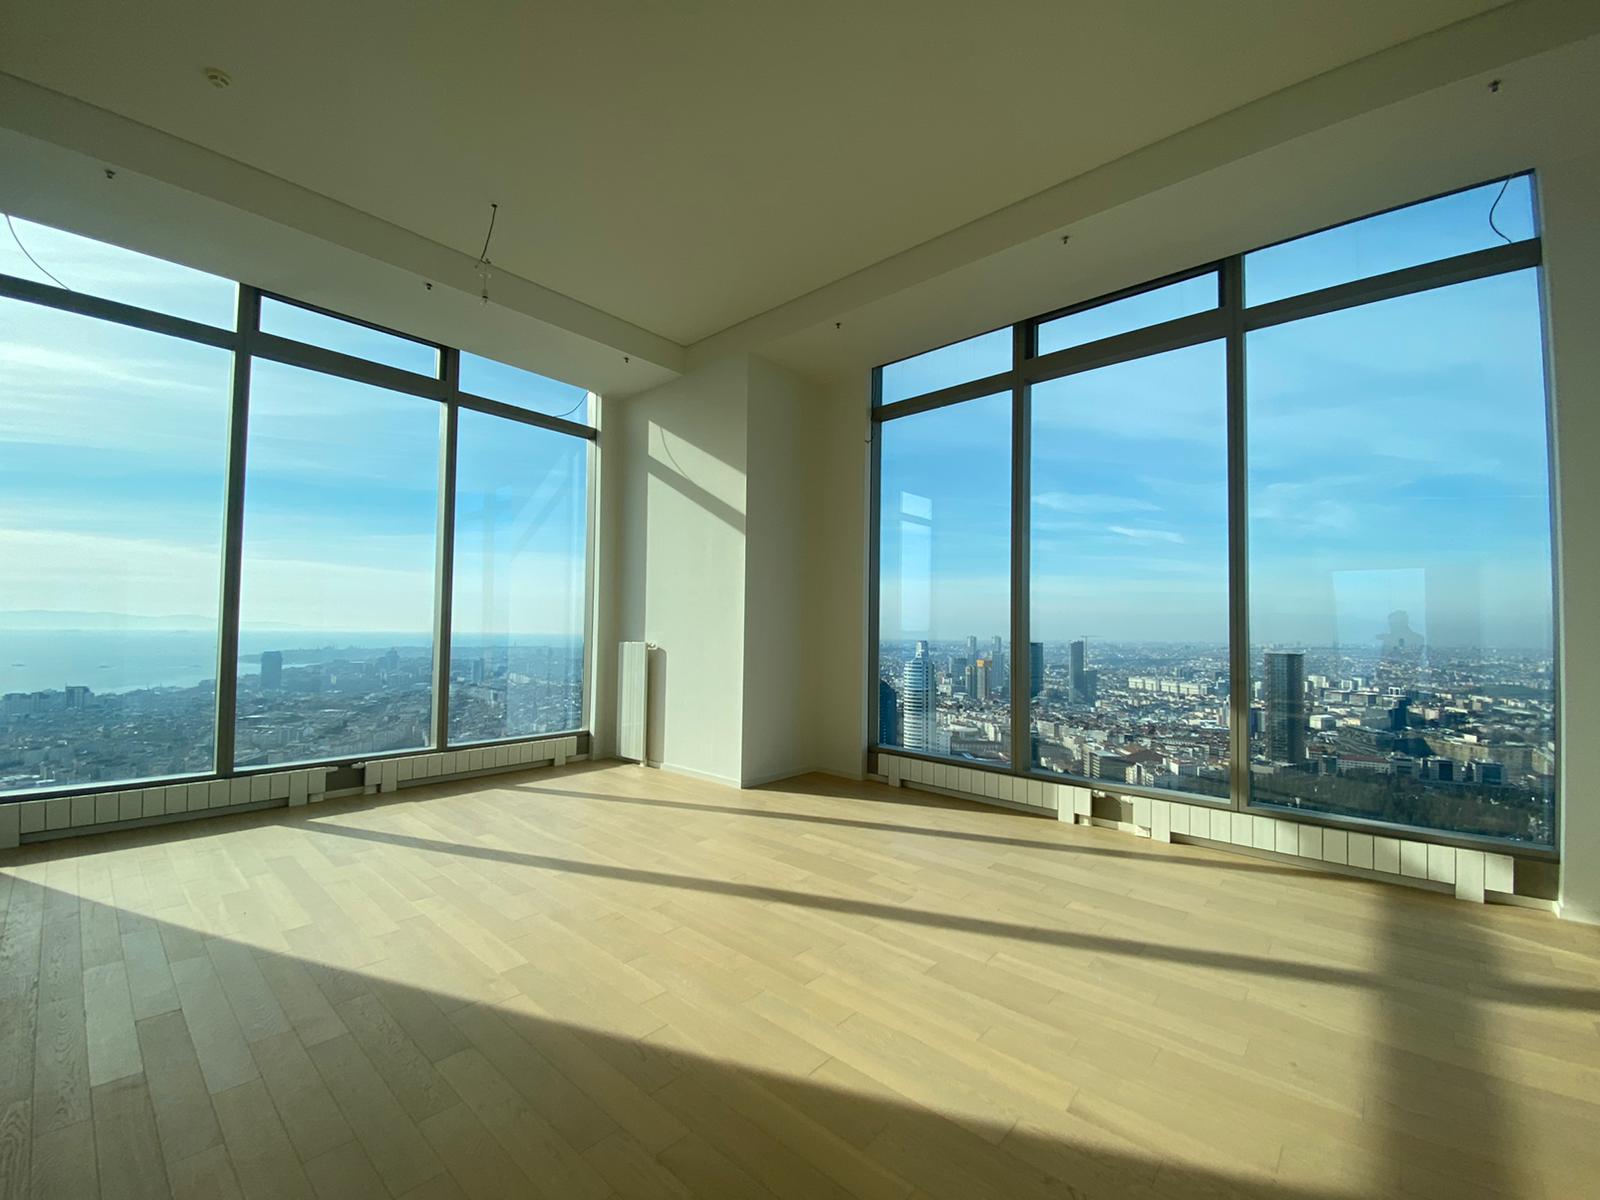 Torun Center Penthouse 42th Floor